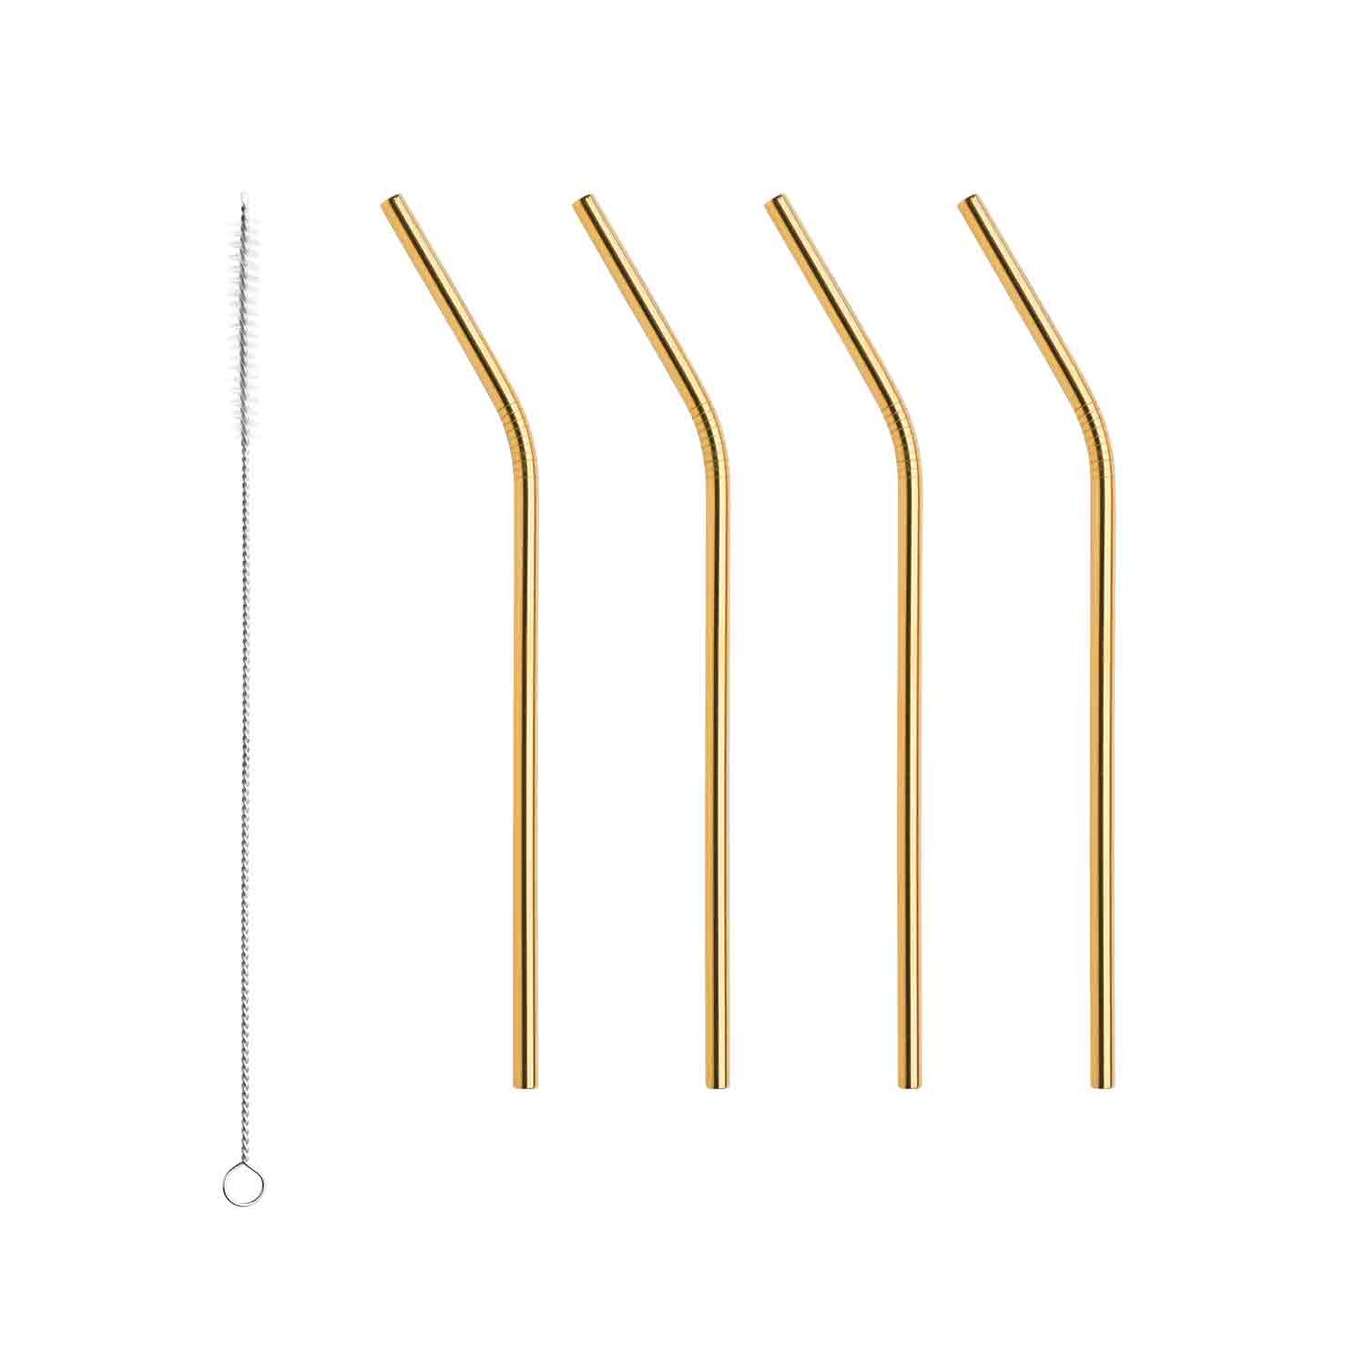 Peak Straws Incl Cleaning Brush, 4-Pack